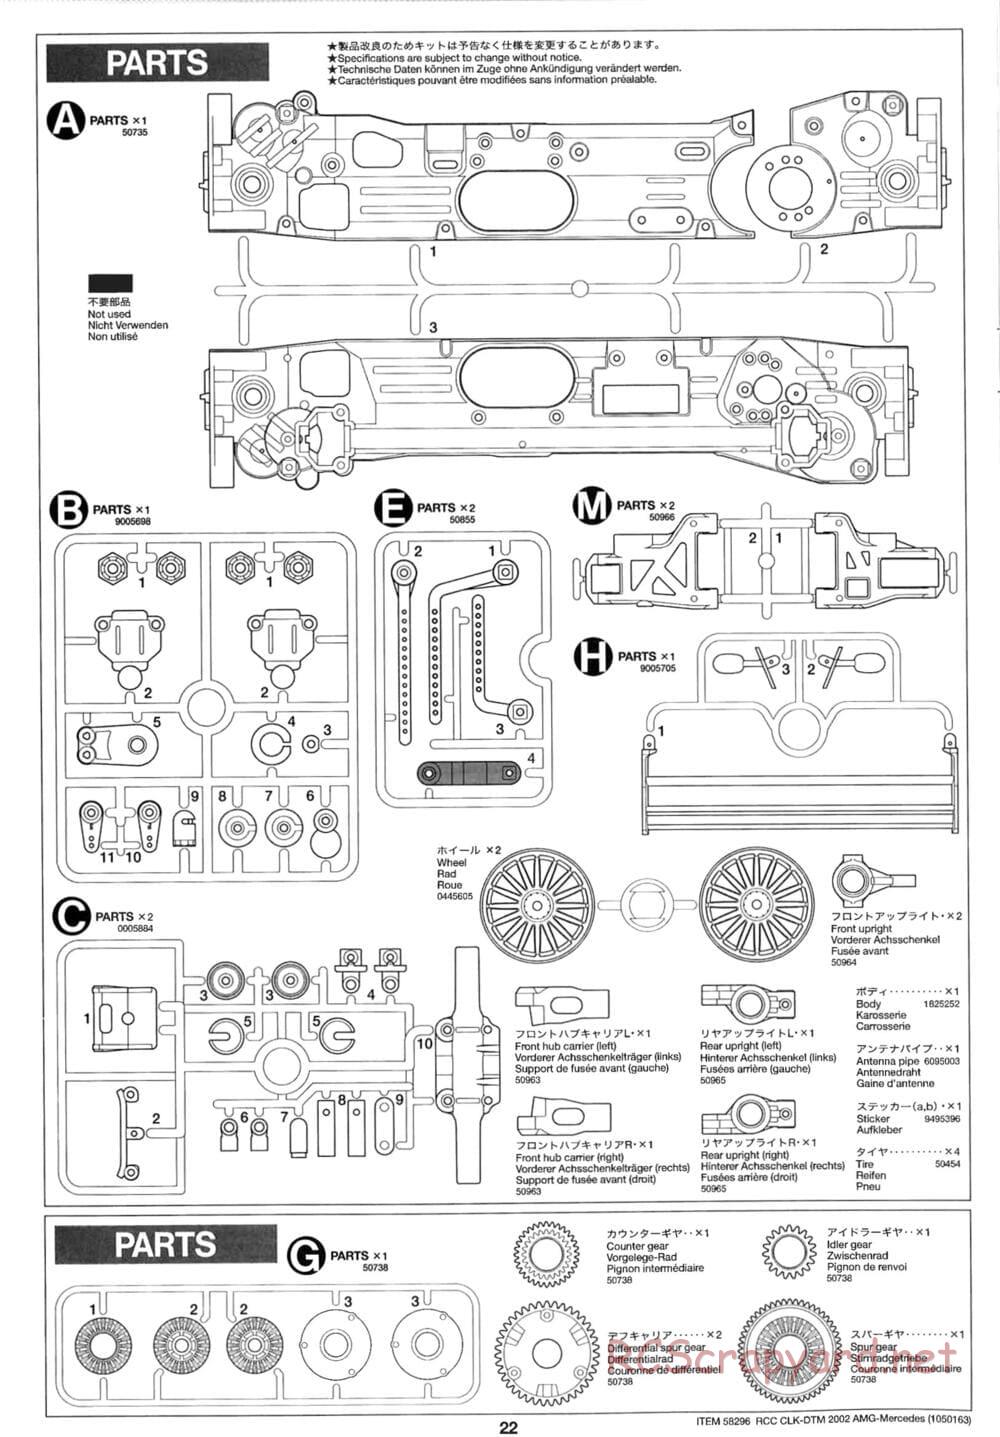 Tamiya - CLK DTM 2002 AMG Mercedes - TL-01 LA Chassis - Manual - Page 22